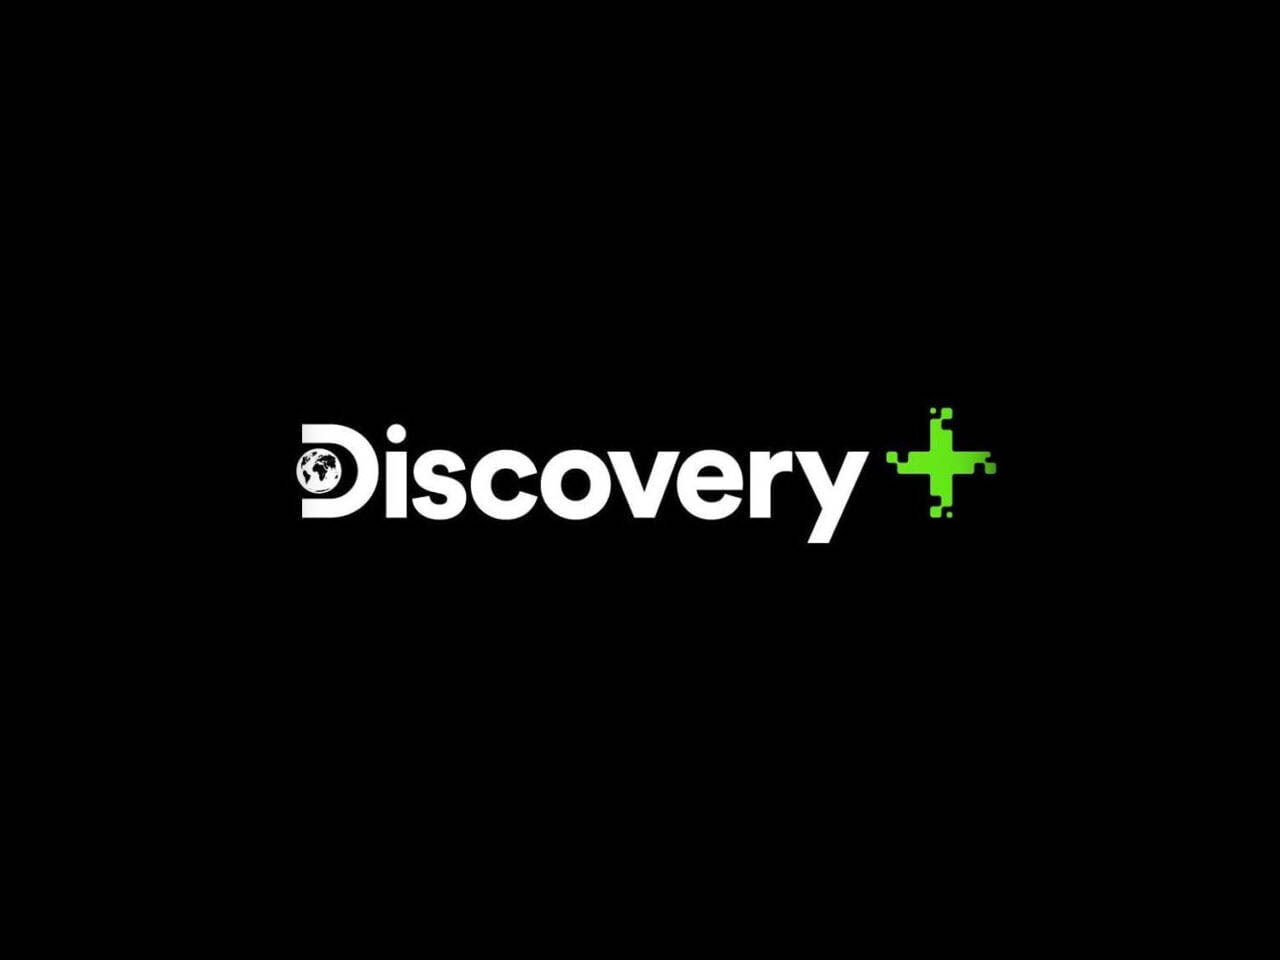 discoveryplus customer service